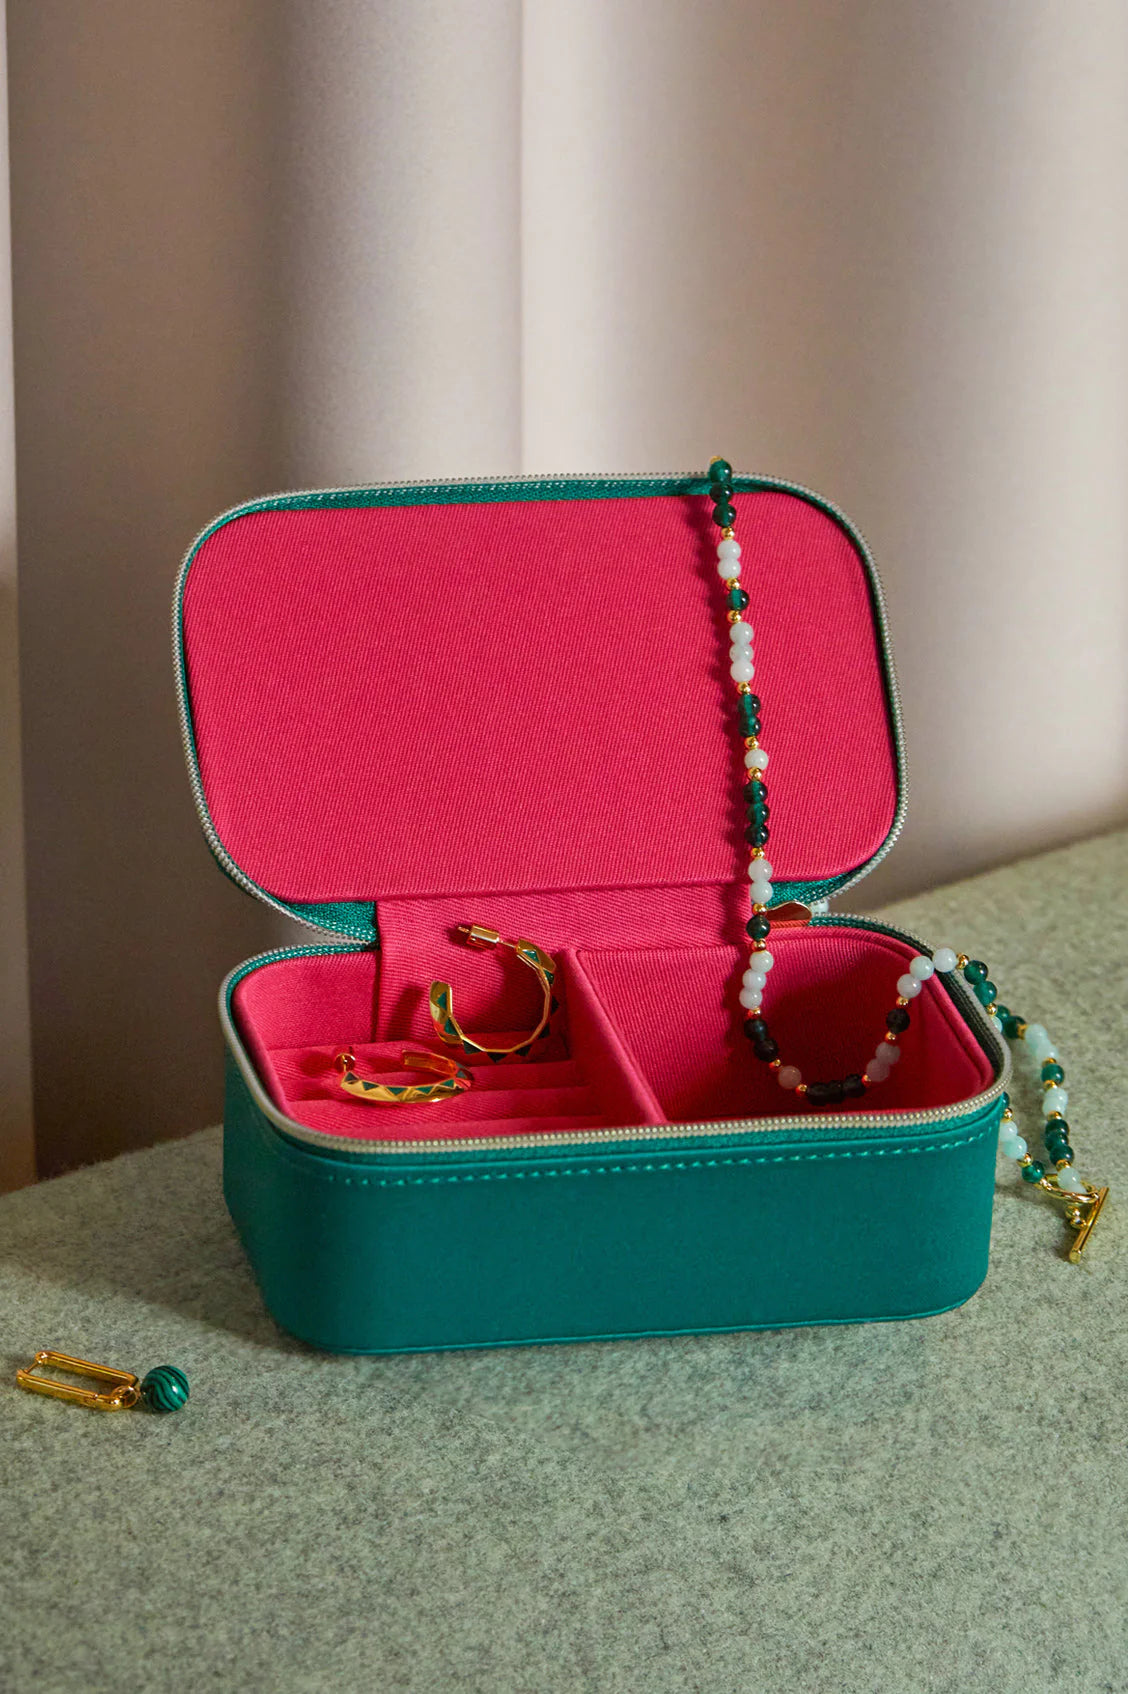 Mini Jewellery Box - Satin Green